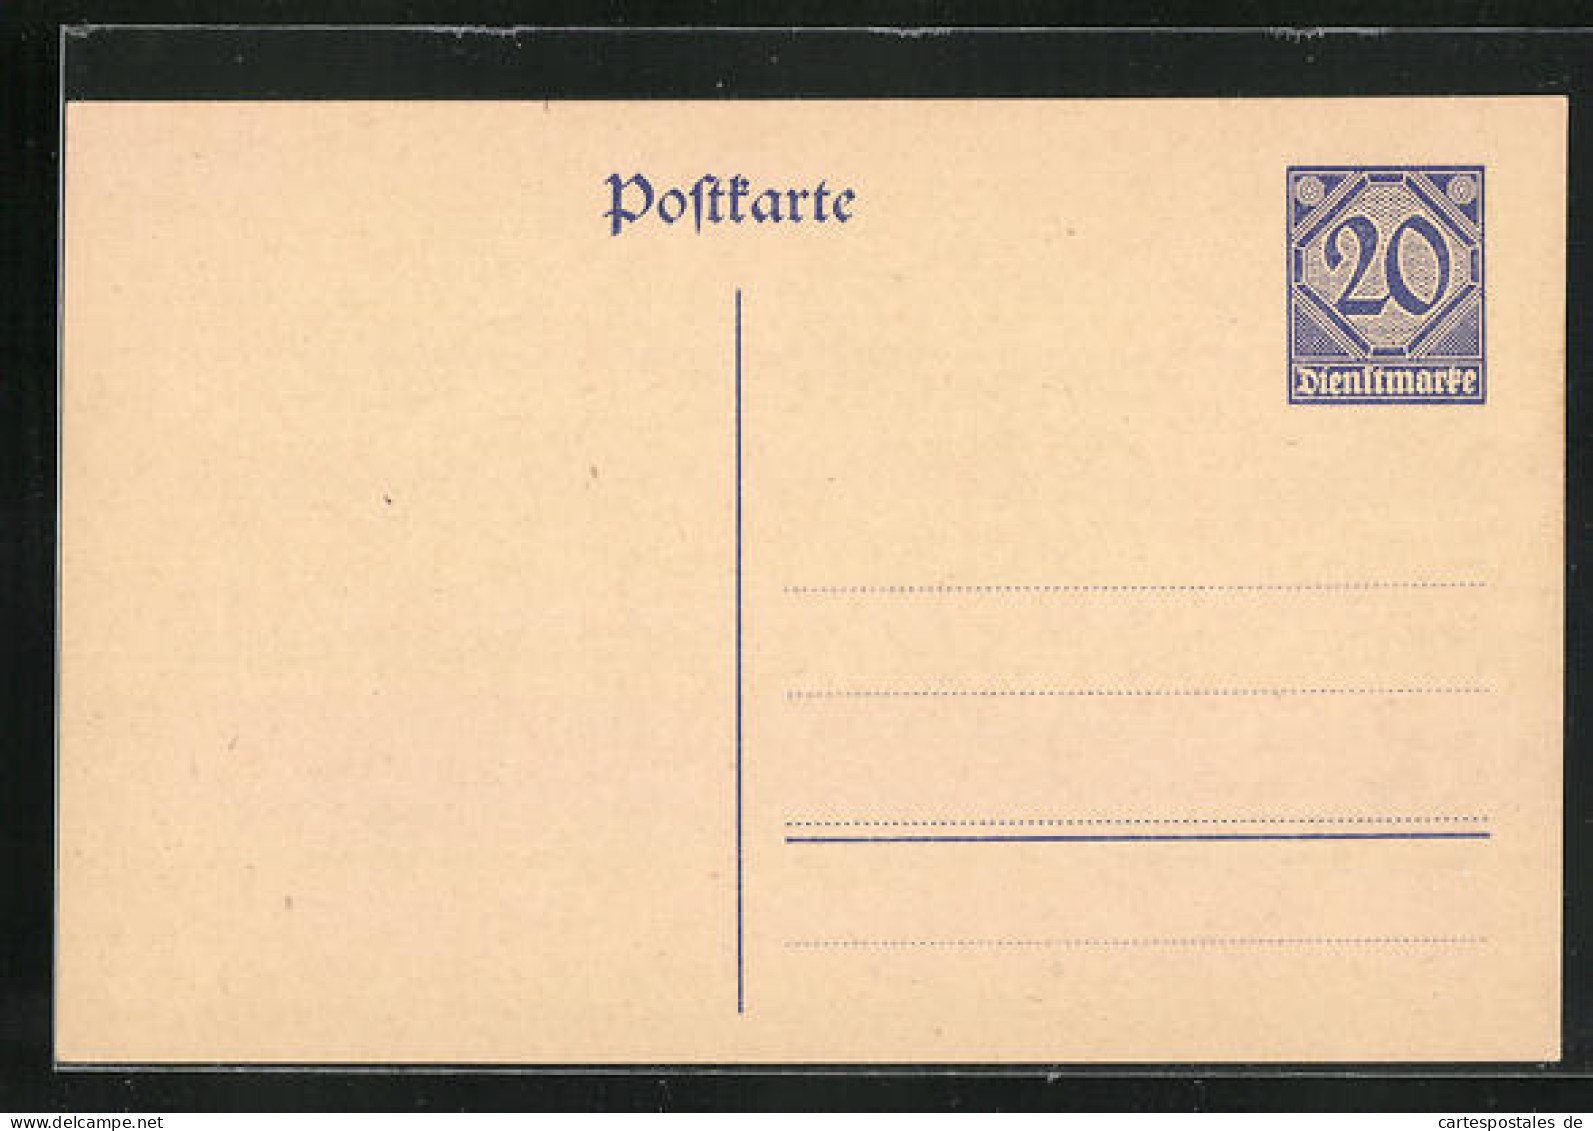 AK Ganzsache Dienstpost, Dienstmarke 20  - Postzegels (afbeeldingen)